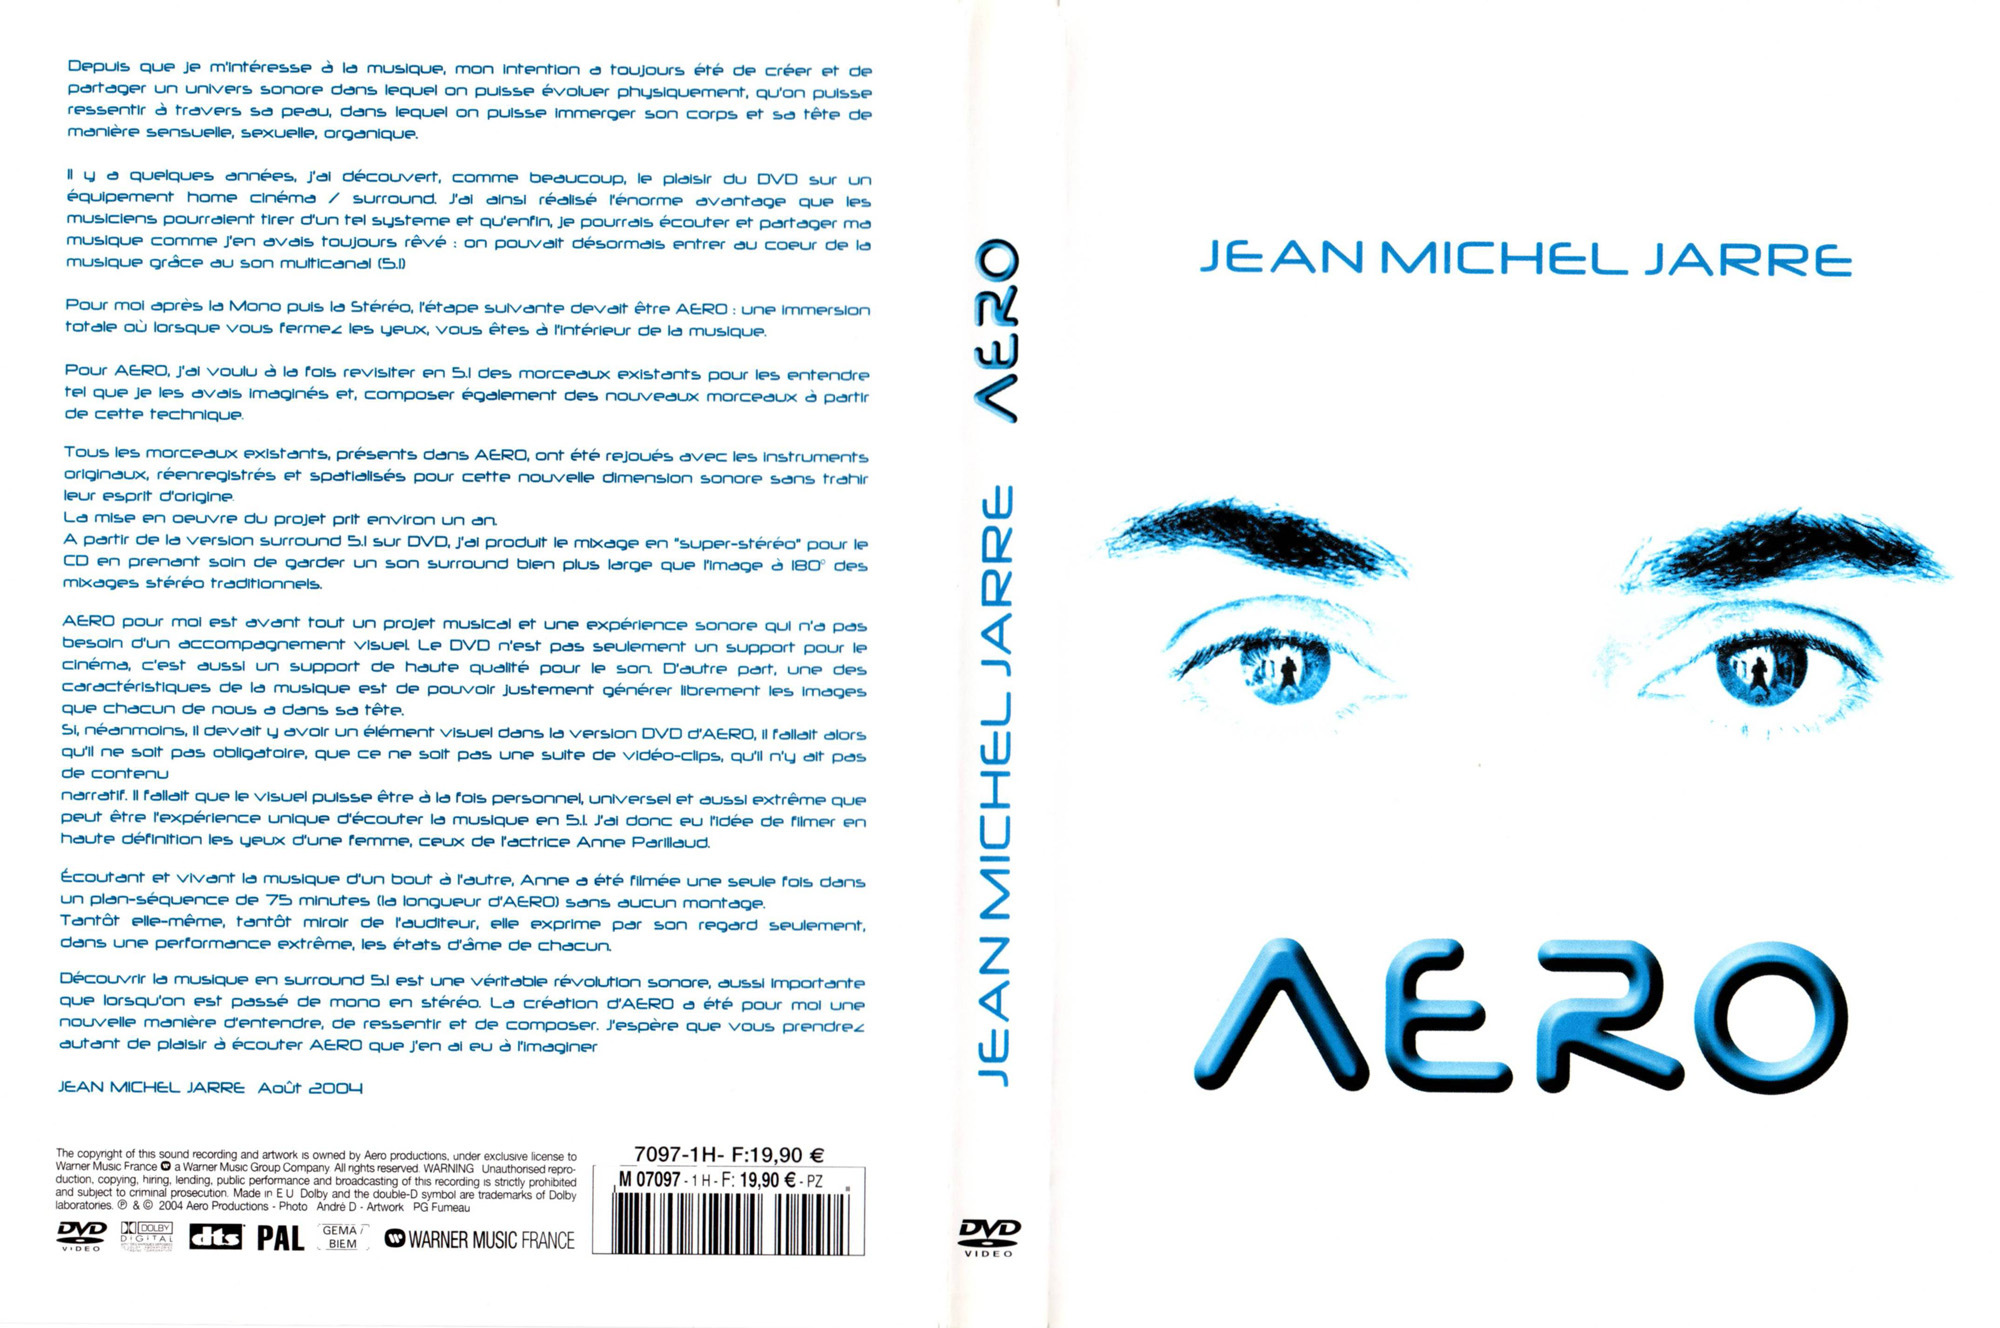 Jaquette DVD Jean-Michel Jarre - Aero